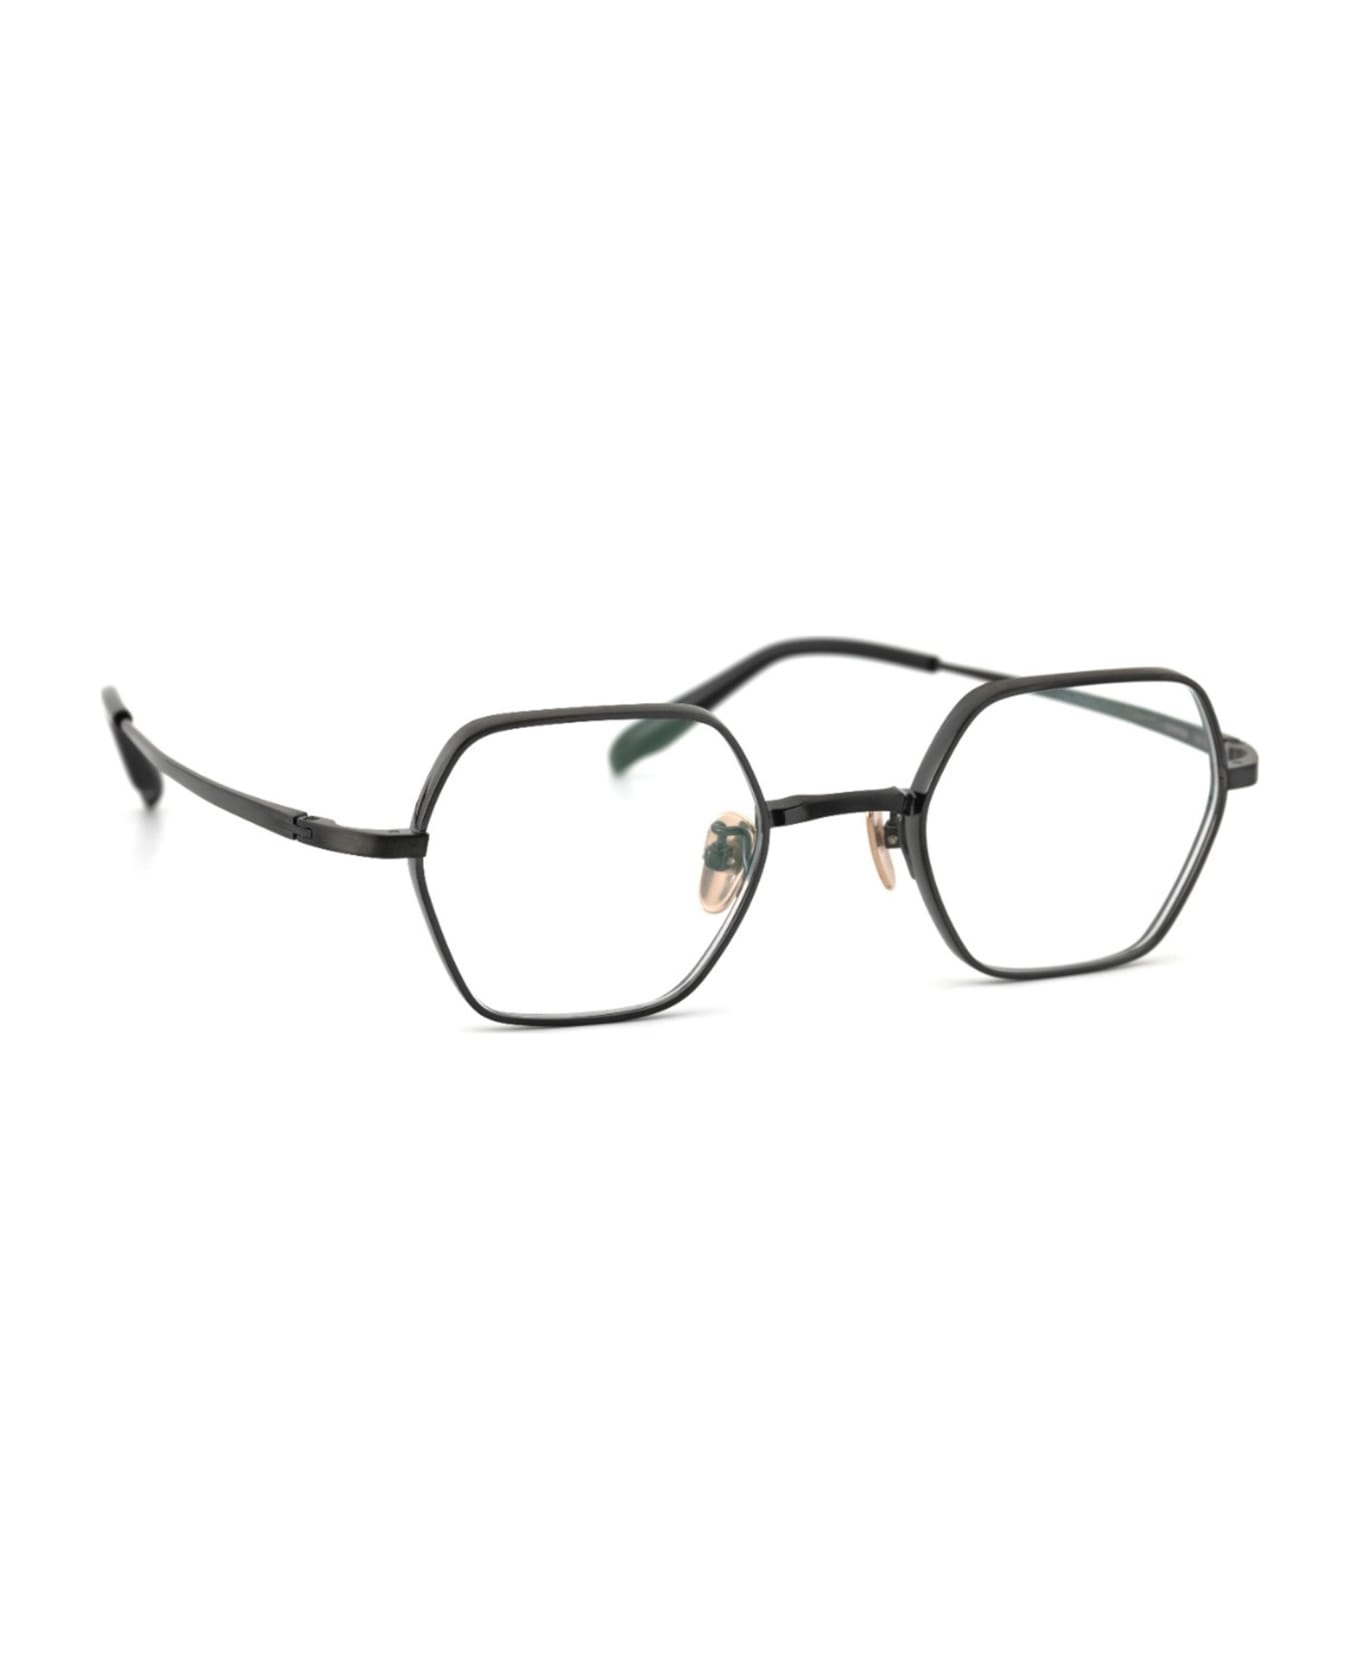 FACTORY900 Titanos X Factory900 Mf-005 - Black Rx Glasses - Black